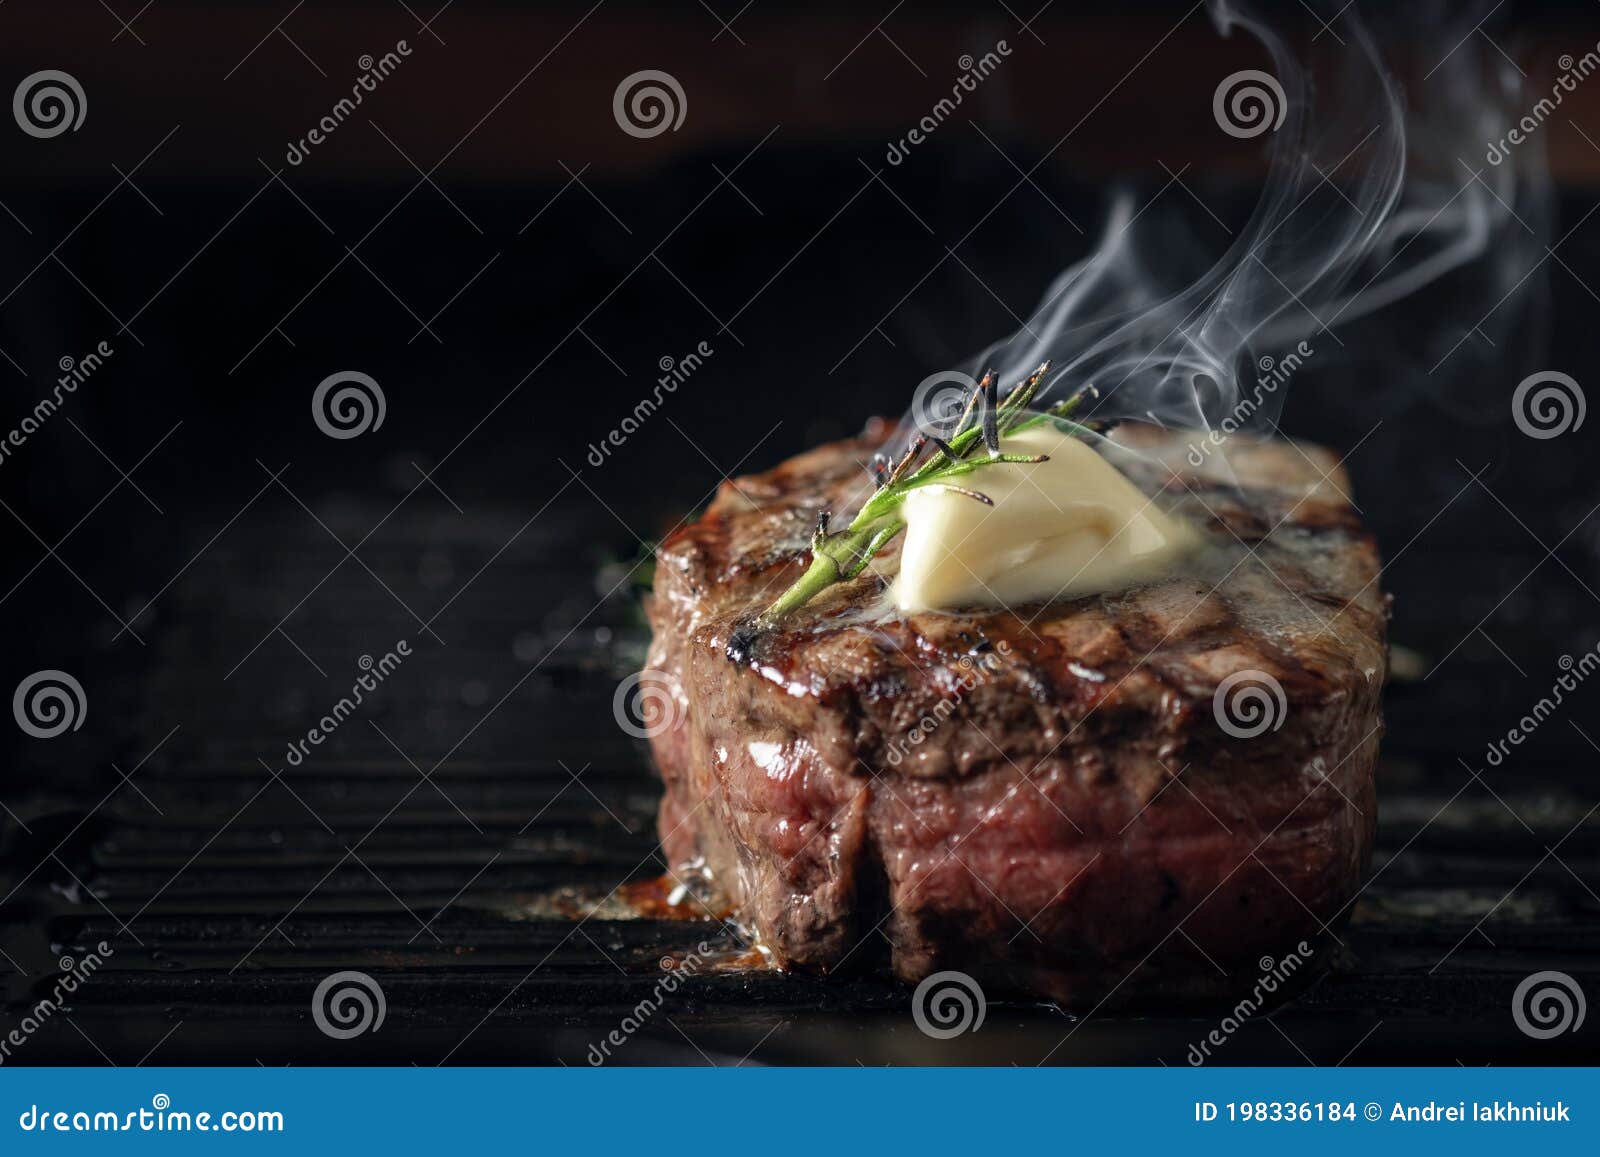 a steaming beef tenderloin steak is grilled